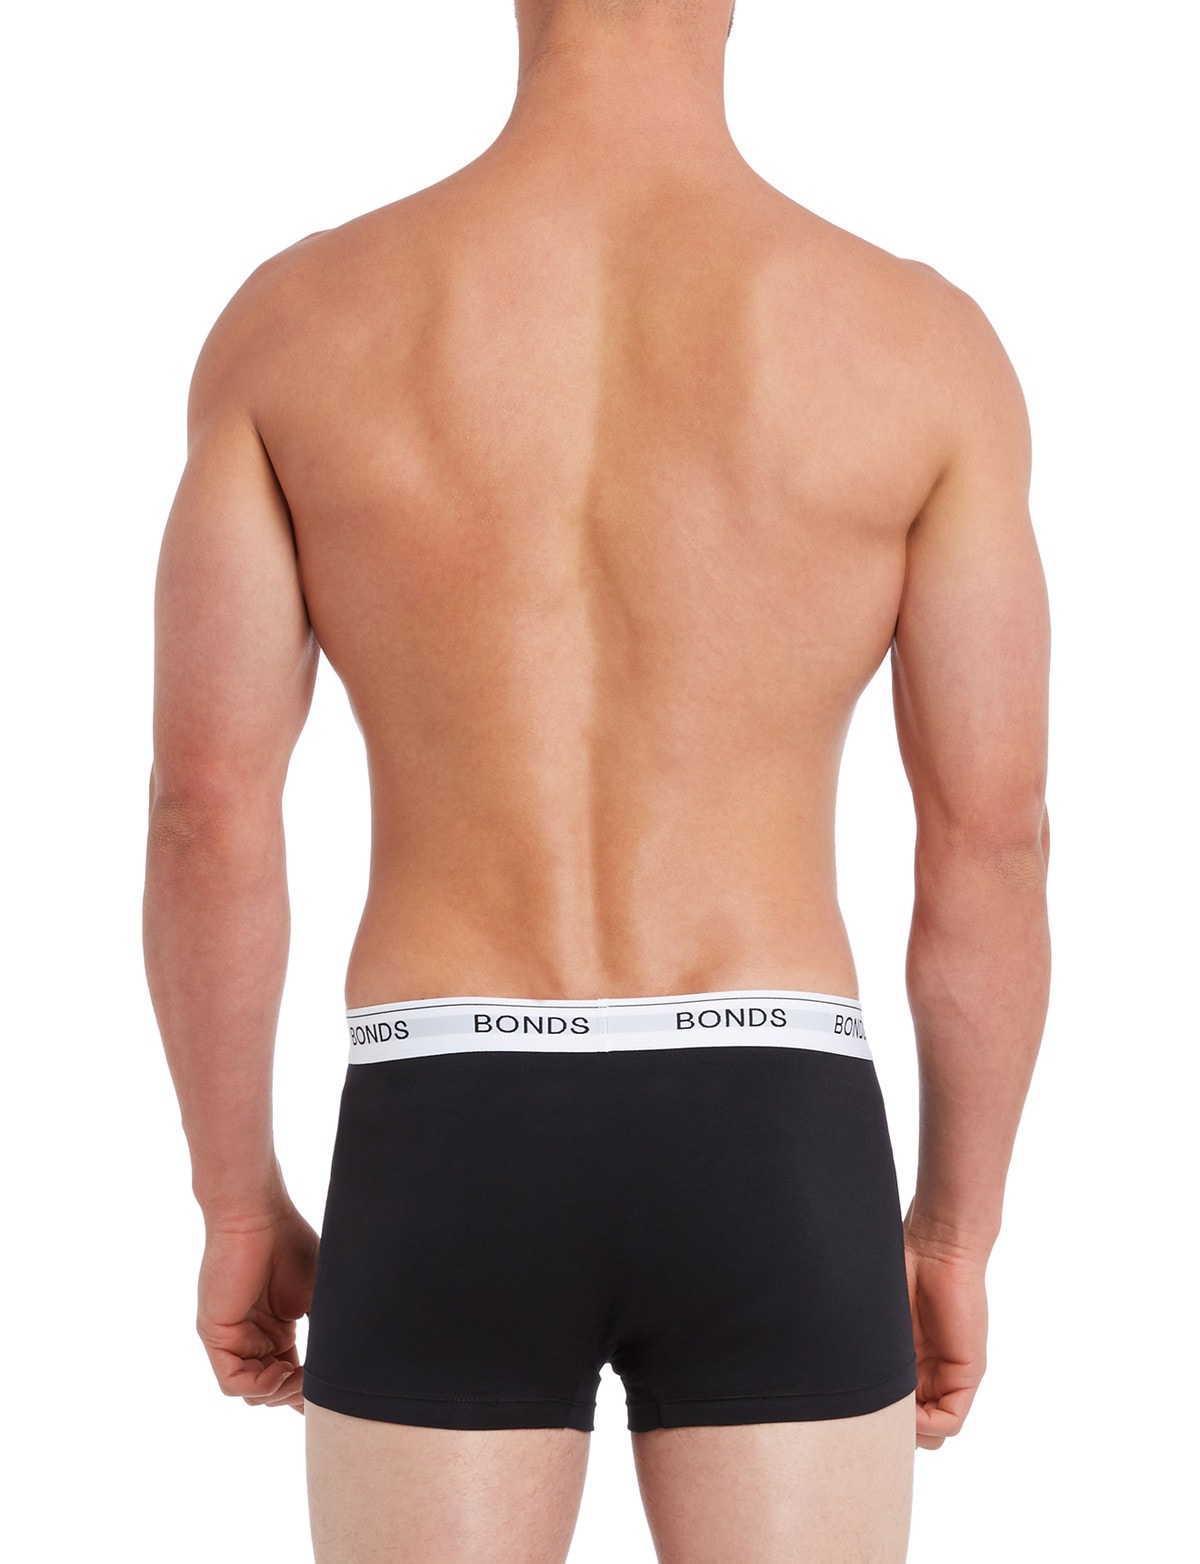 Bonds Men's Underwear Cotton Blend Guyfront Trunk - 3 Pack